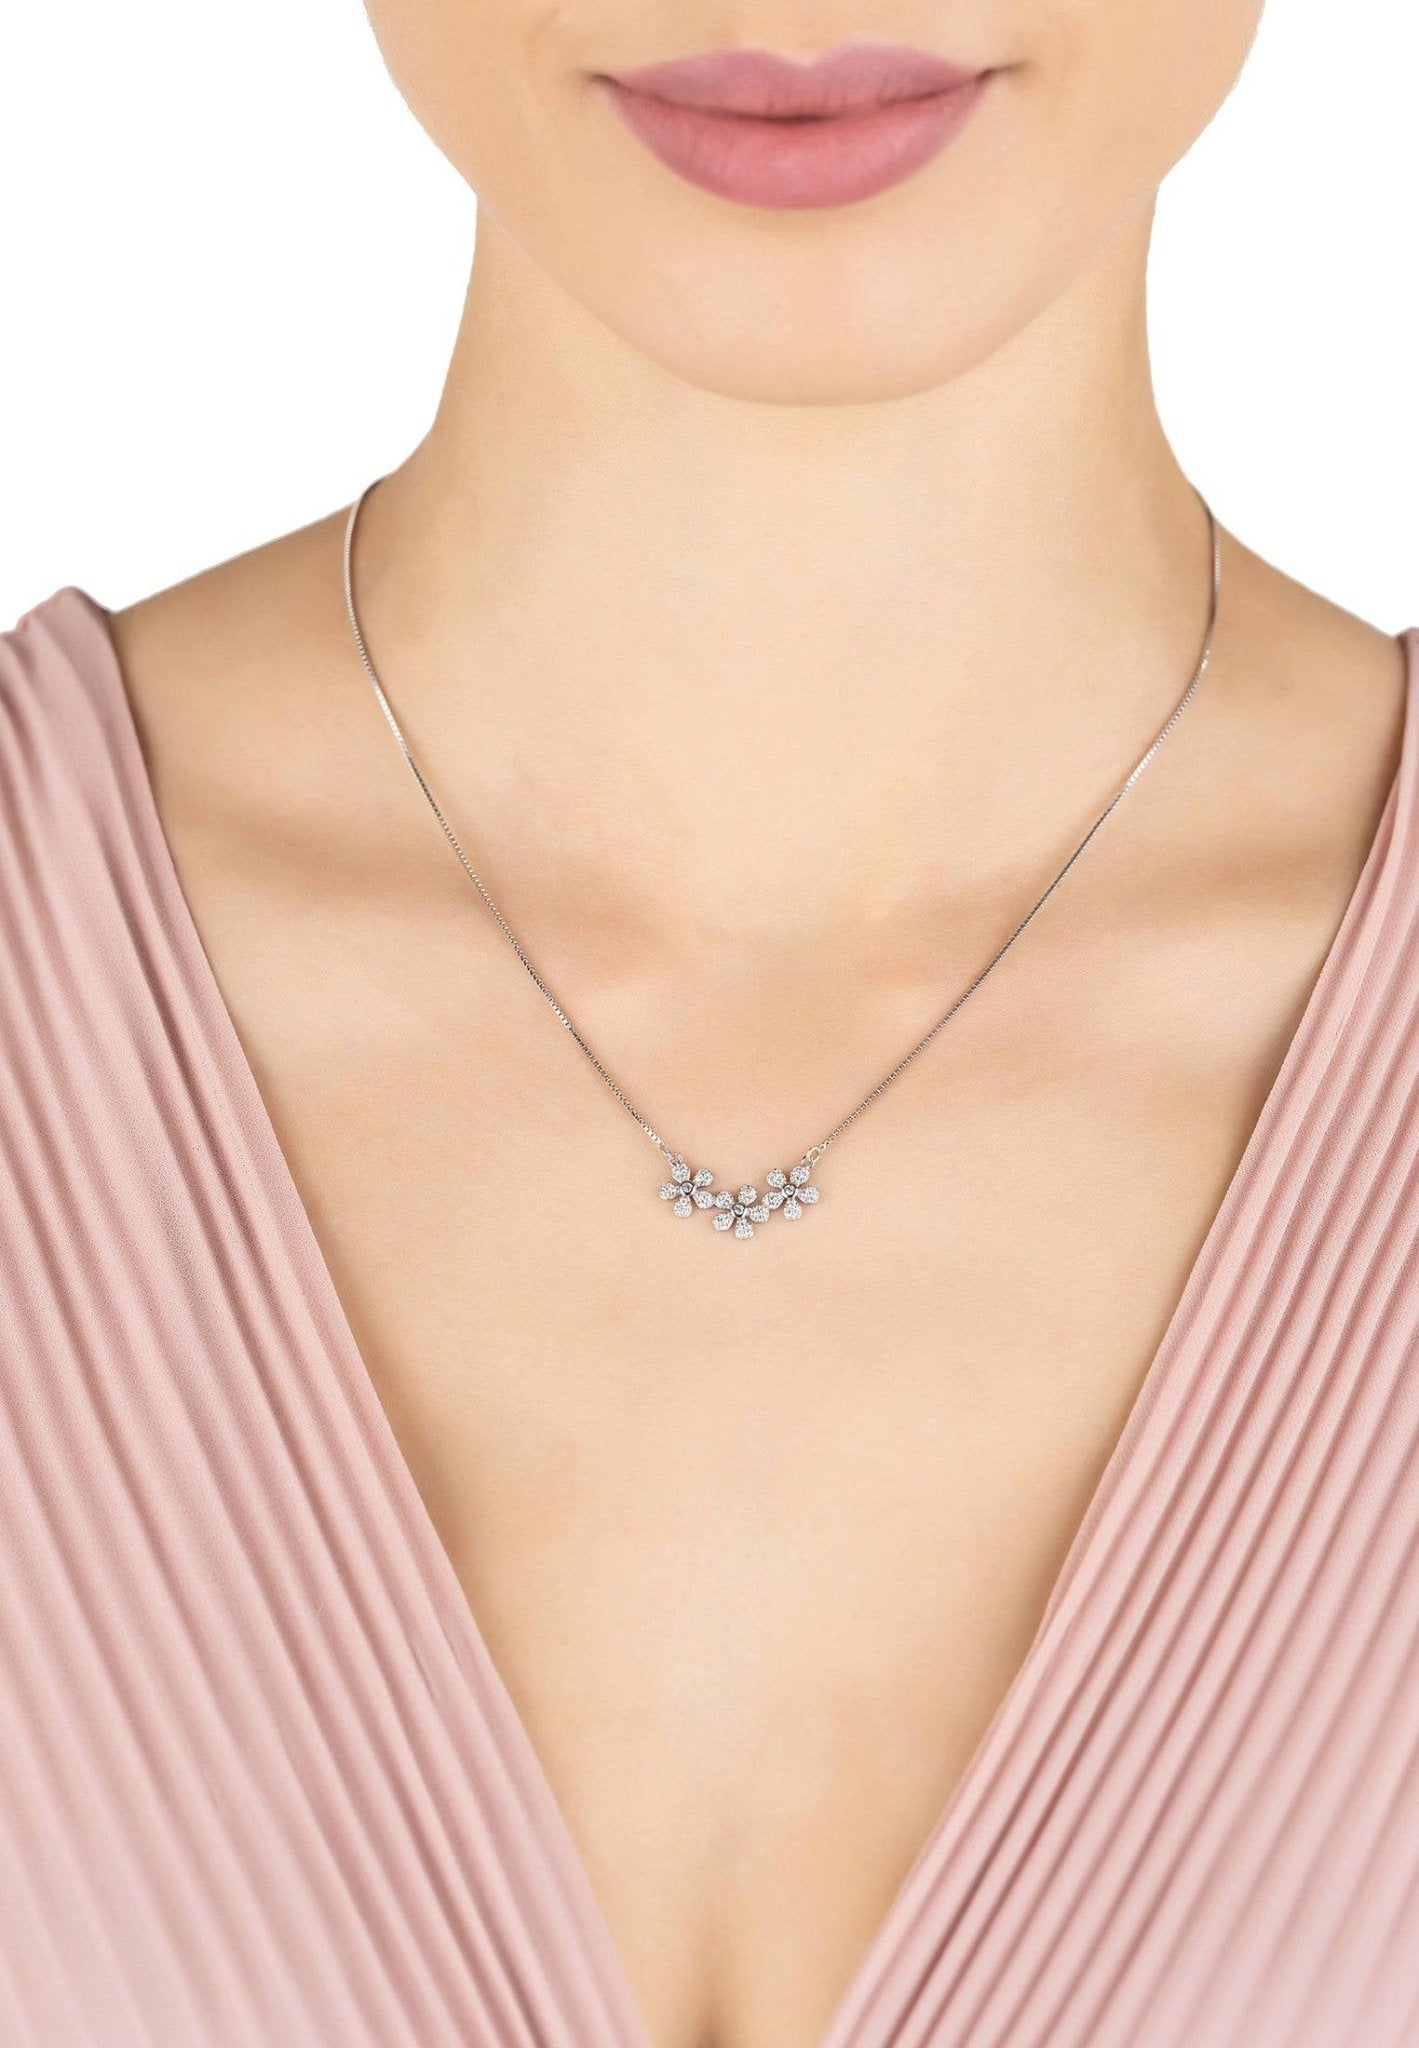 Daisy Chain Necklace Silver - LATELITA Necklaces